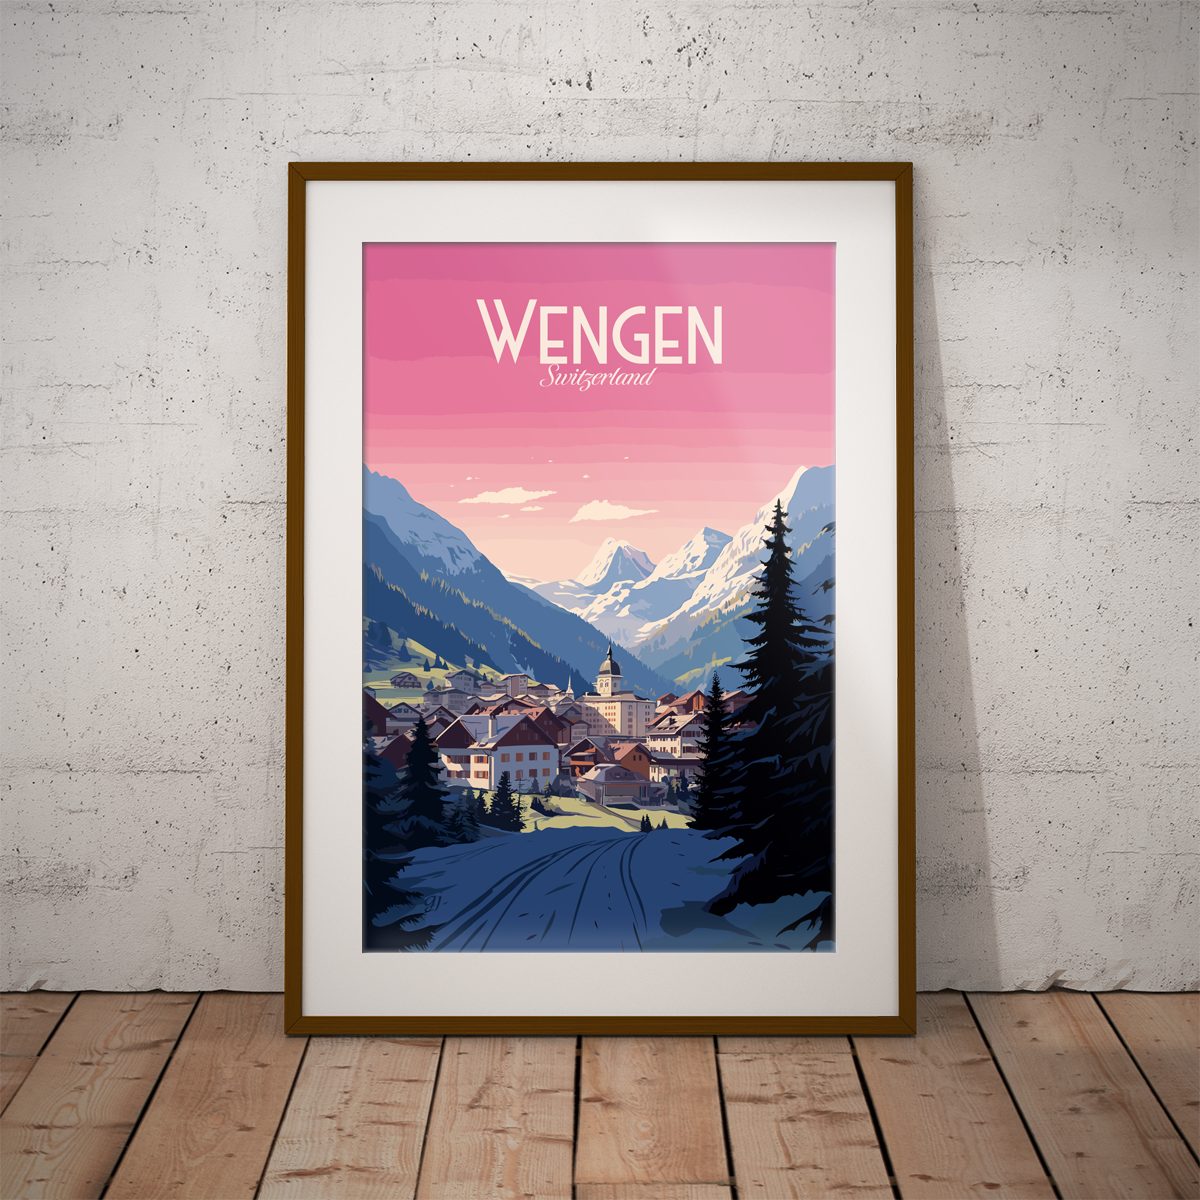 Wengen poster by bon voyage design